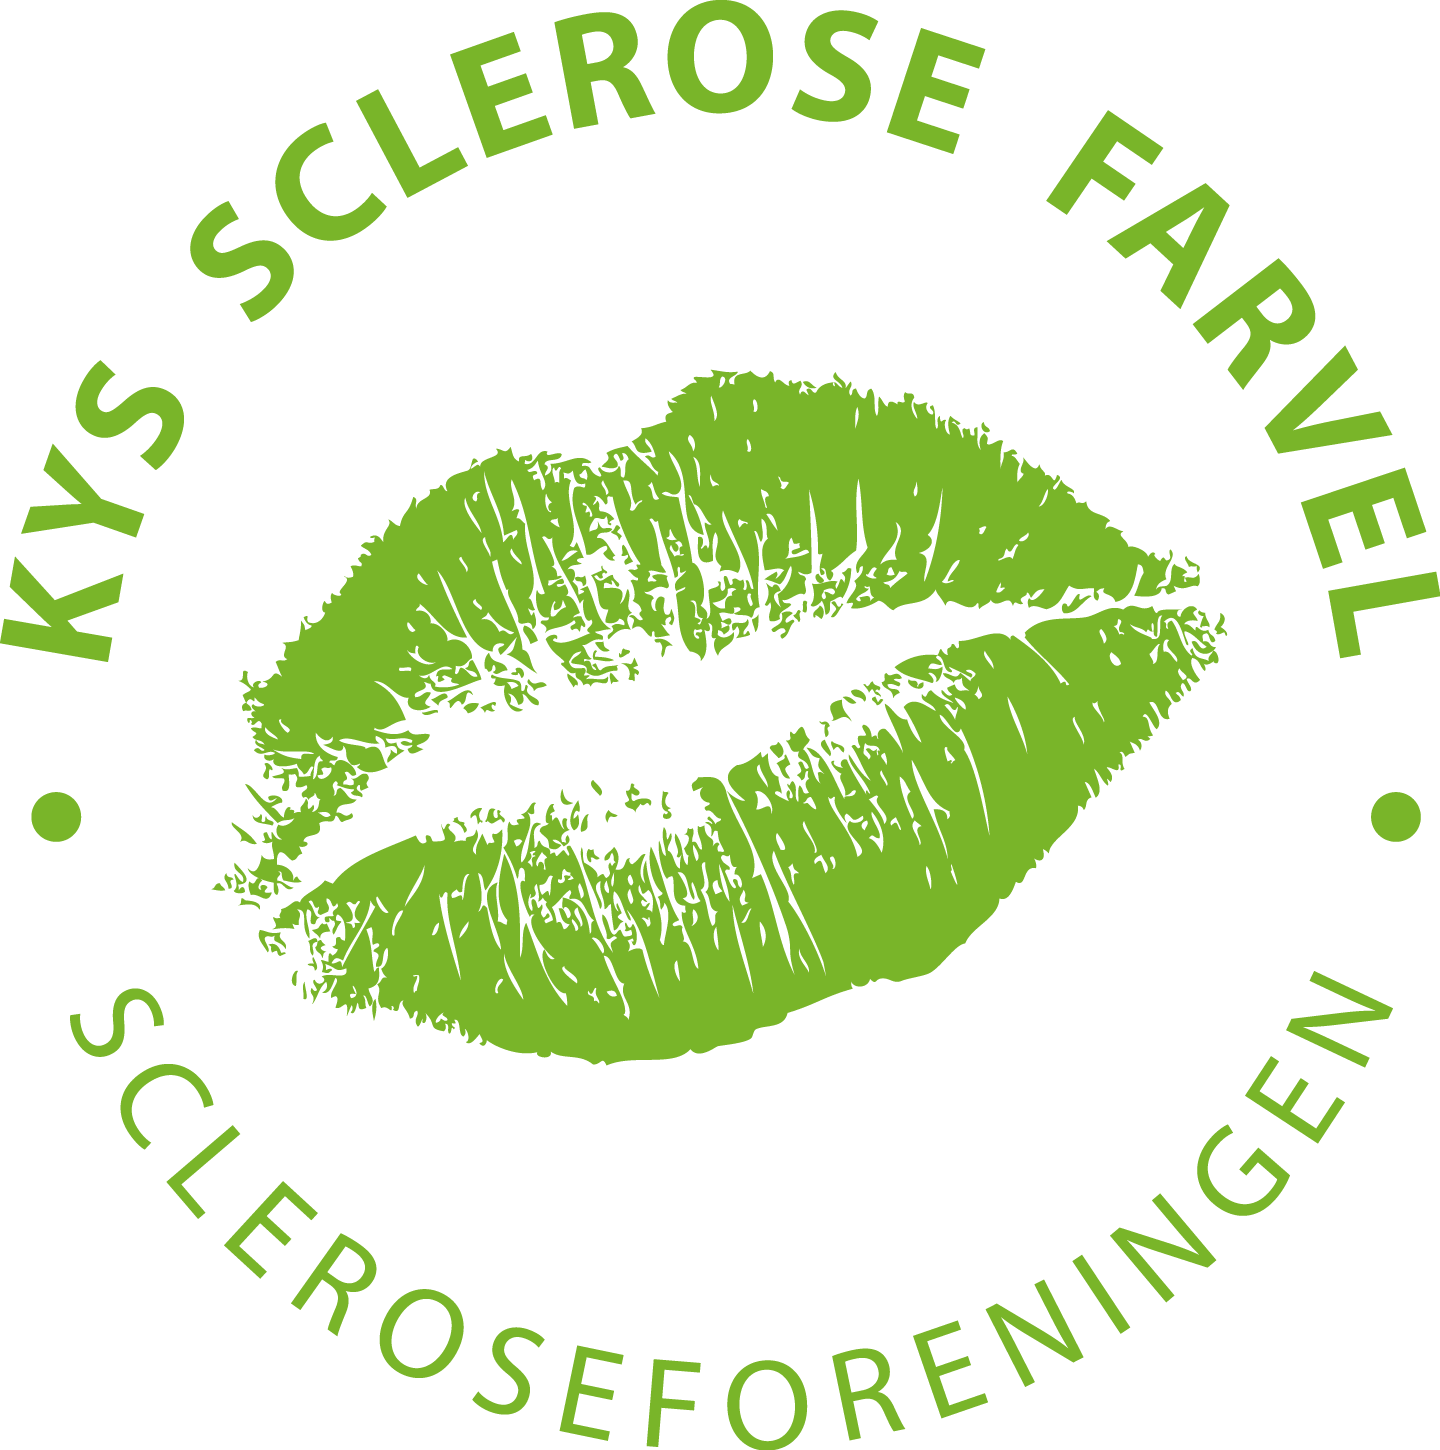 Sclerose_kys_farvel_logo_RGB